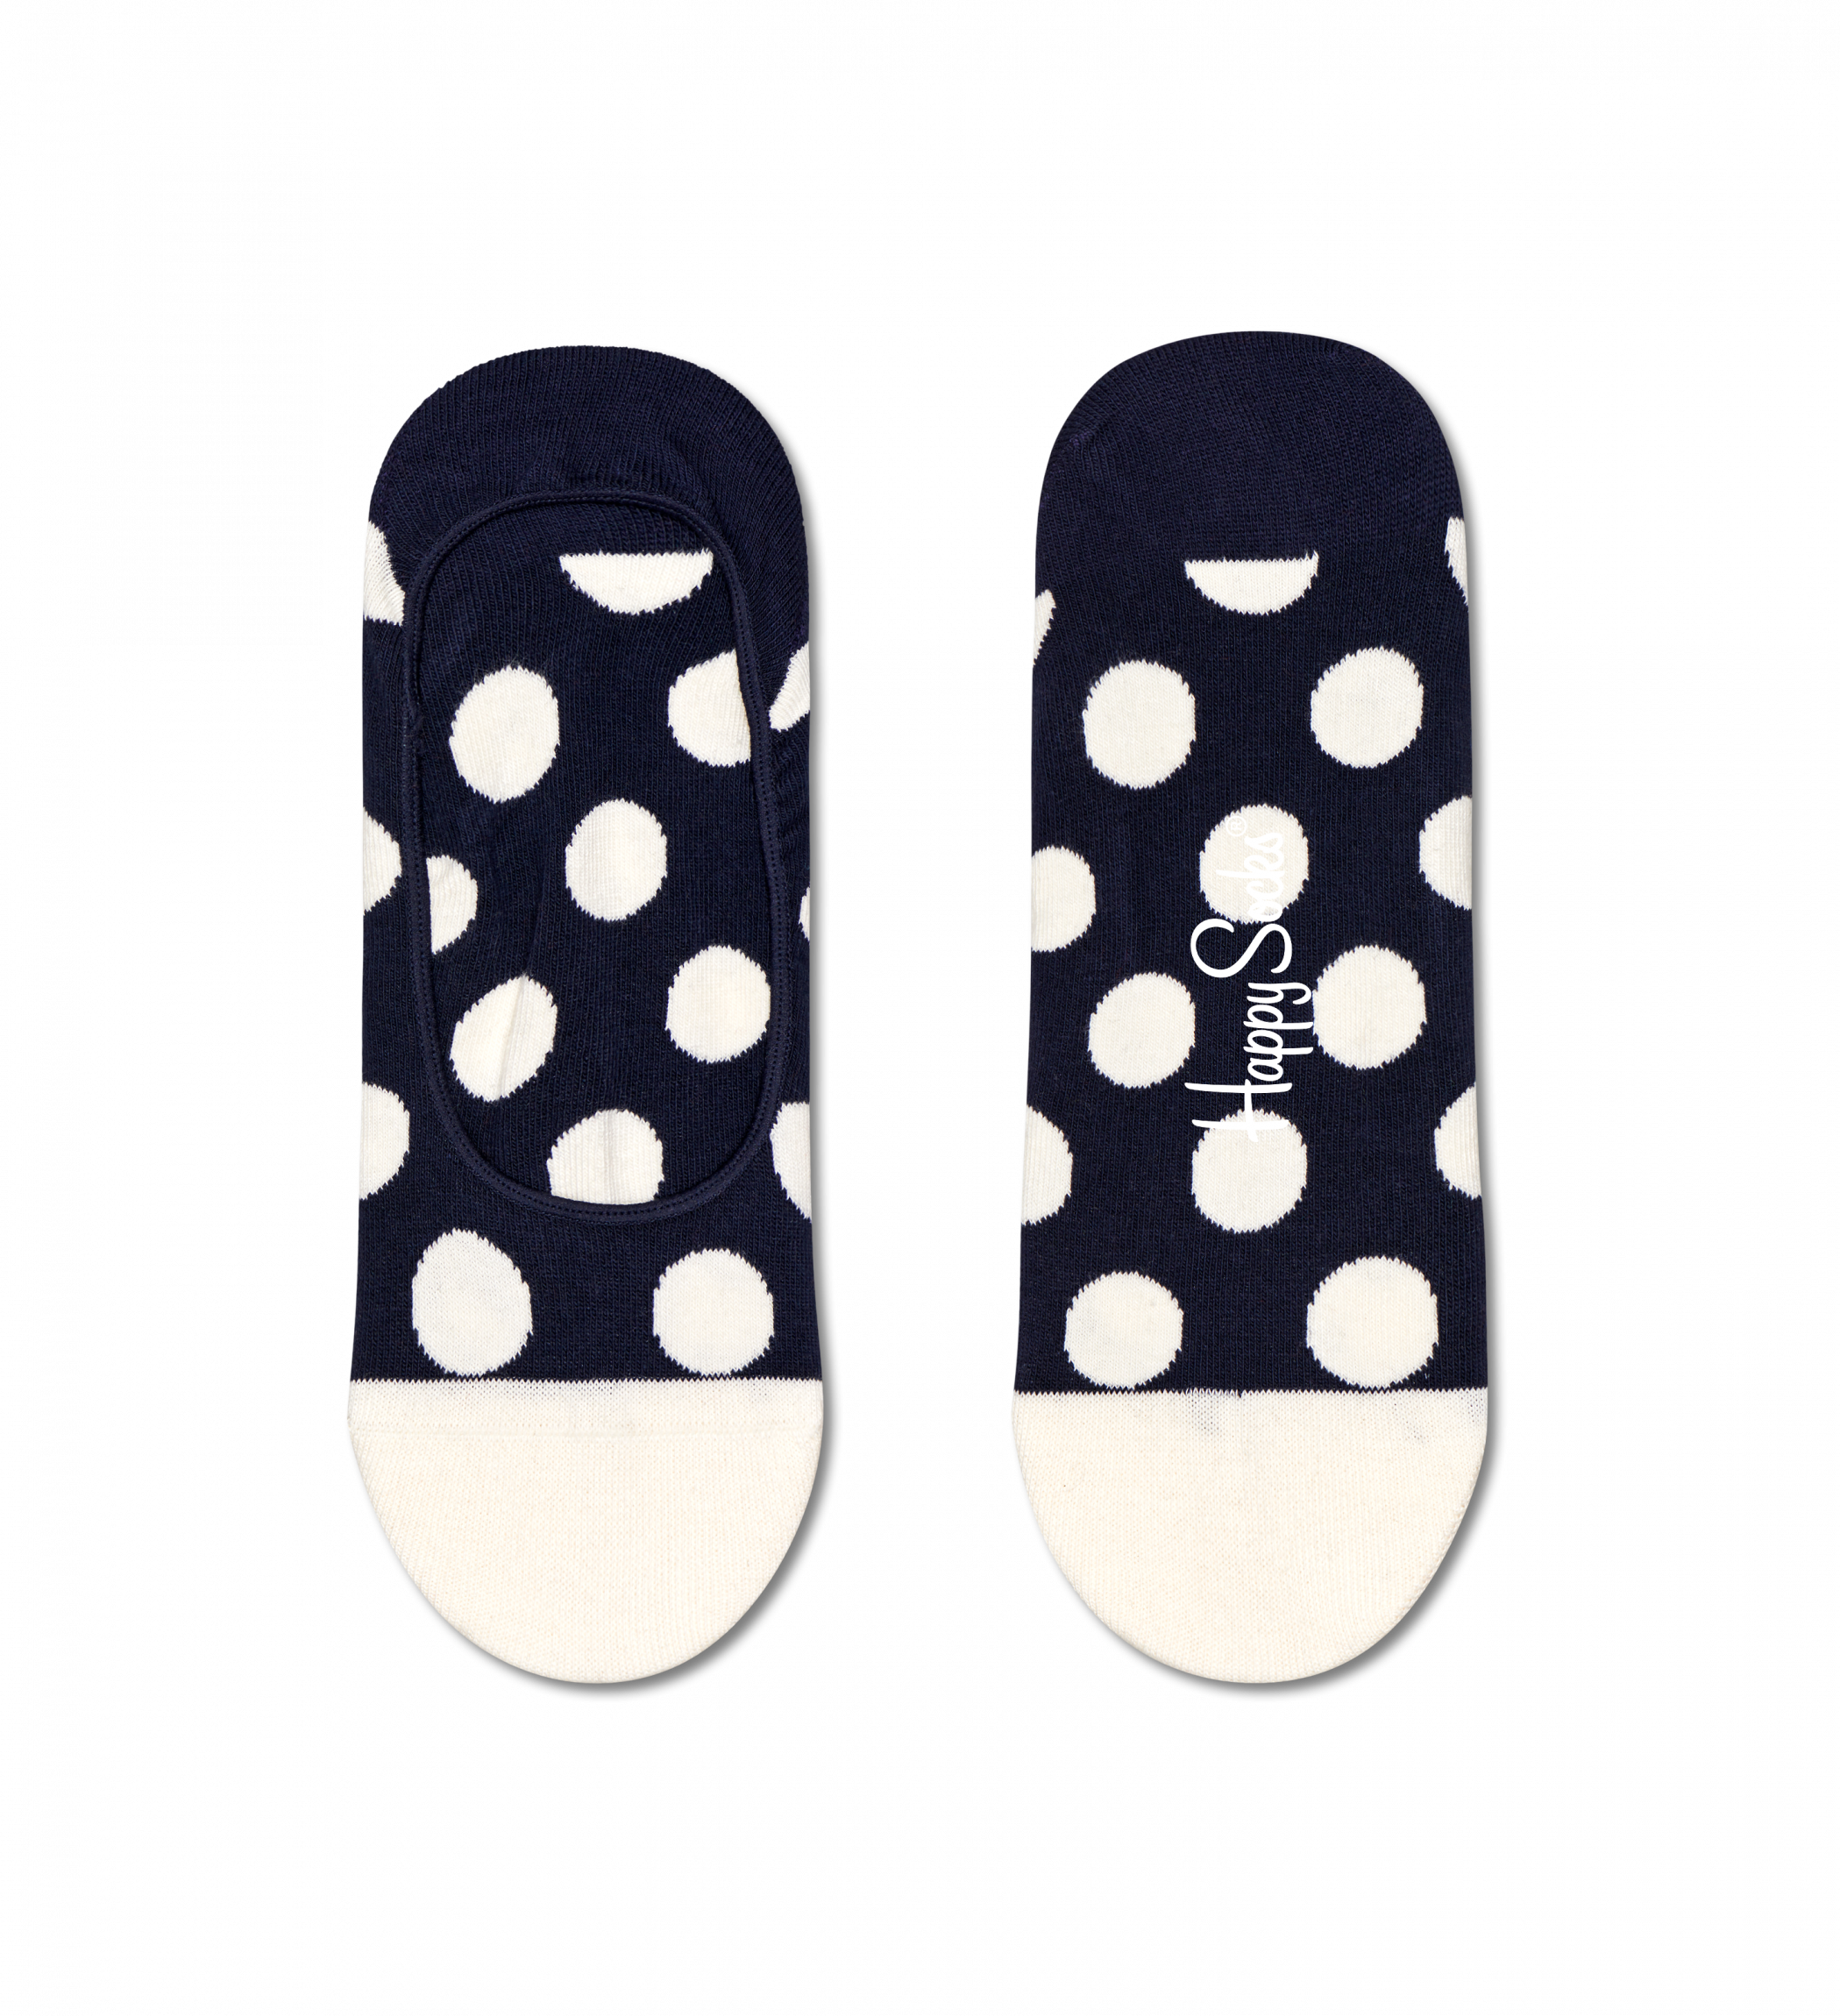 Modré nízke ponožky Happy Socks s bodkami, vzor Big Dot